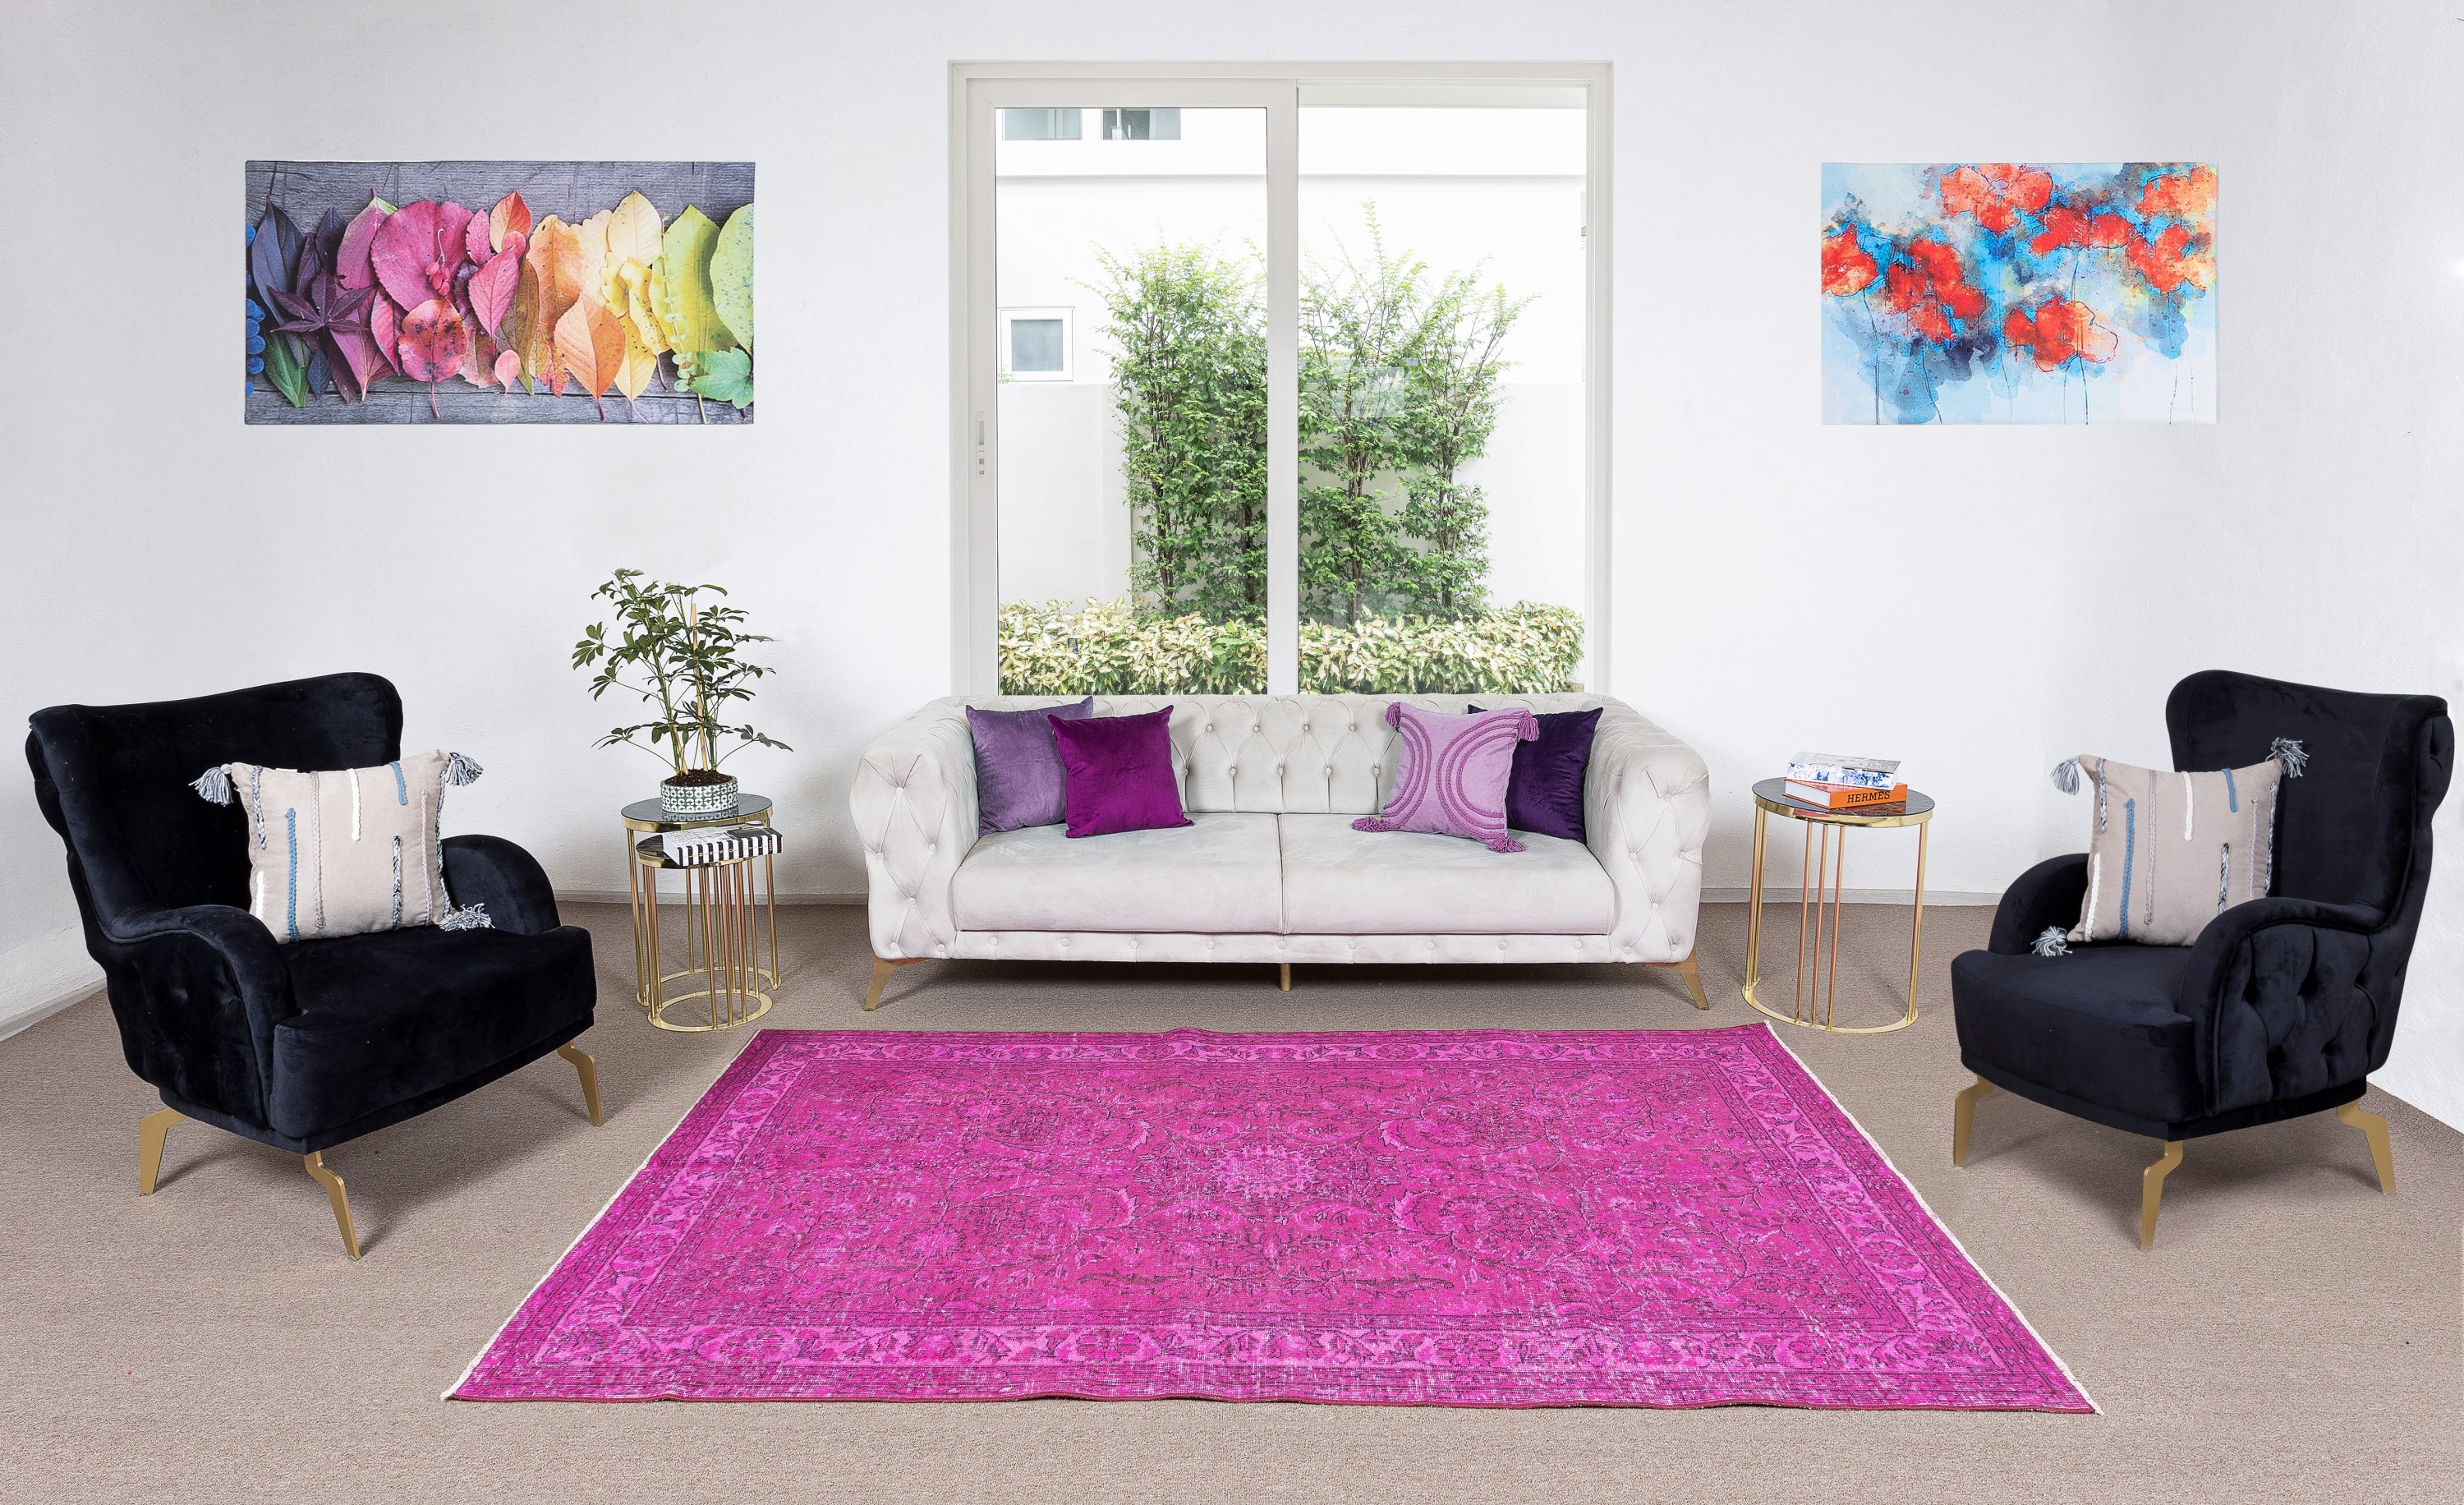 5.3x8.6 Ft Handmade Turkish Decorative Rug in Fuchsia Pink for Modern Interiors